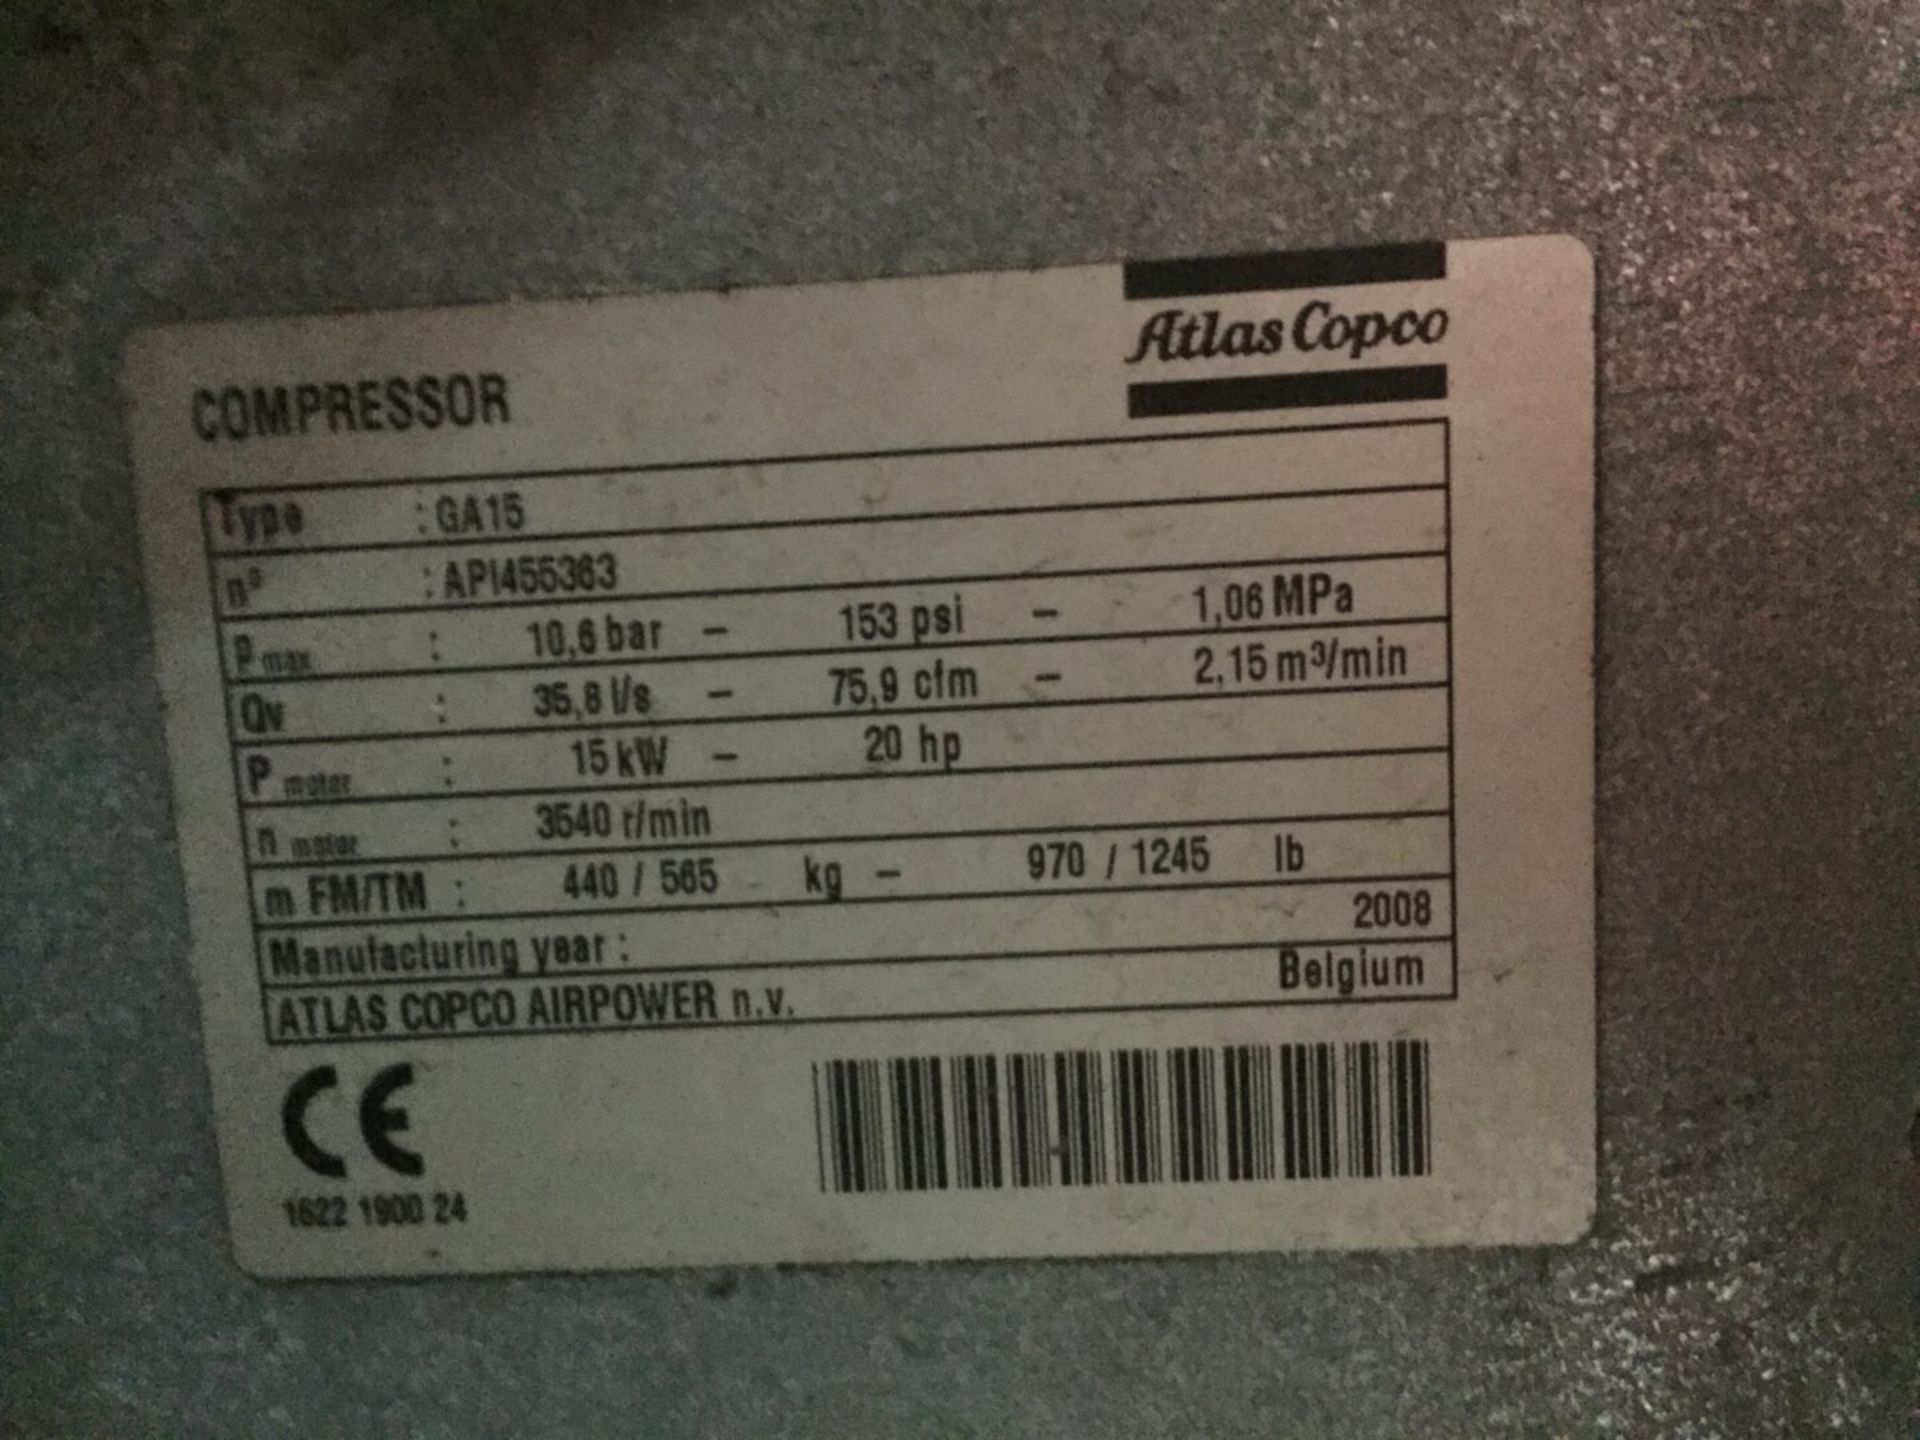 Atlas Copco GA15FF 20 hp Rotary Screw Air Compressor, S/N API455363, 2008 - Image 6 of 8